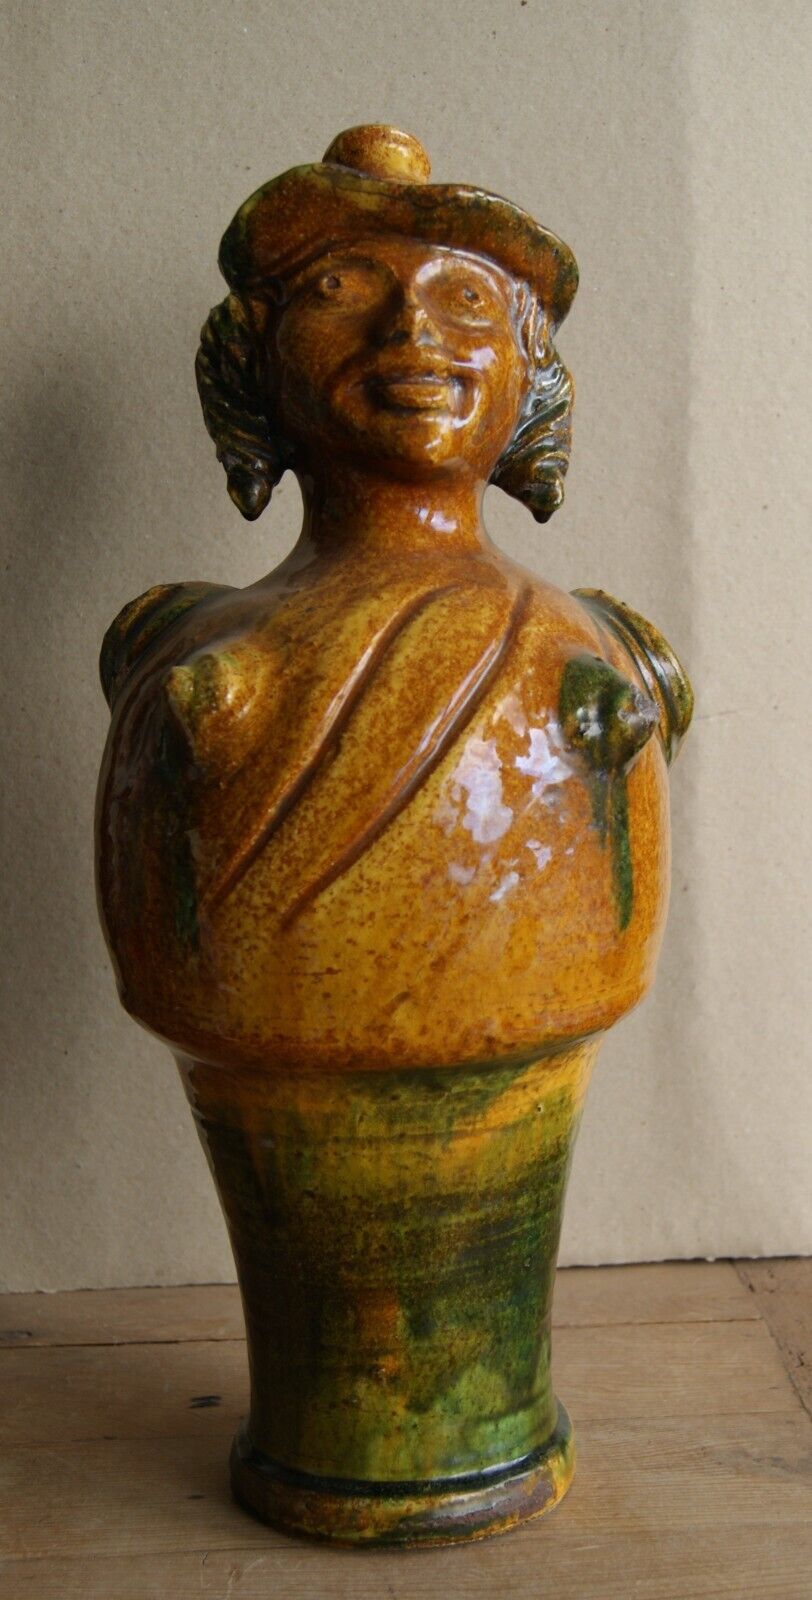 Antique Italian Glazed Earthenware Figural Jug Late 19th - Early 20th Century